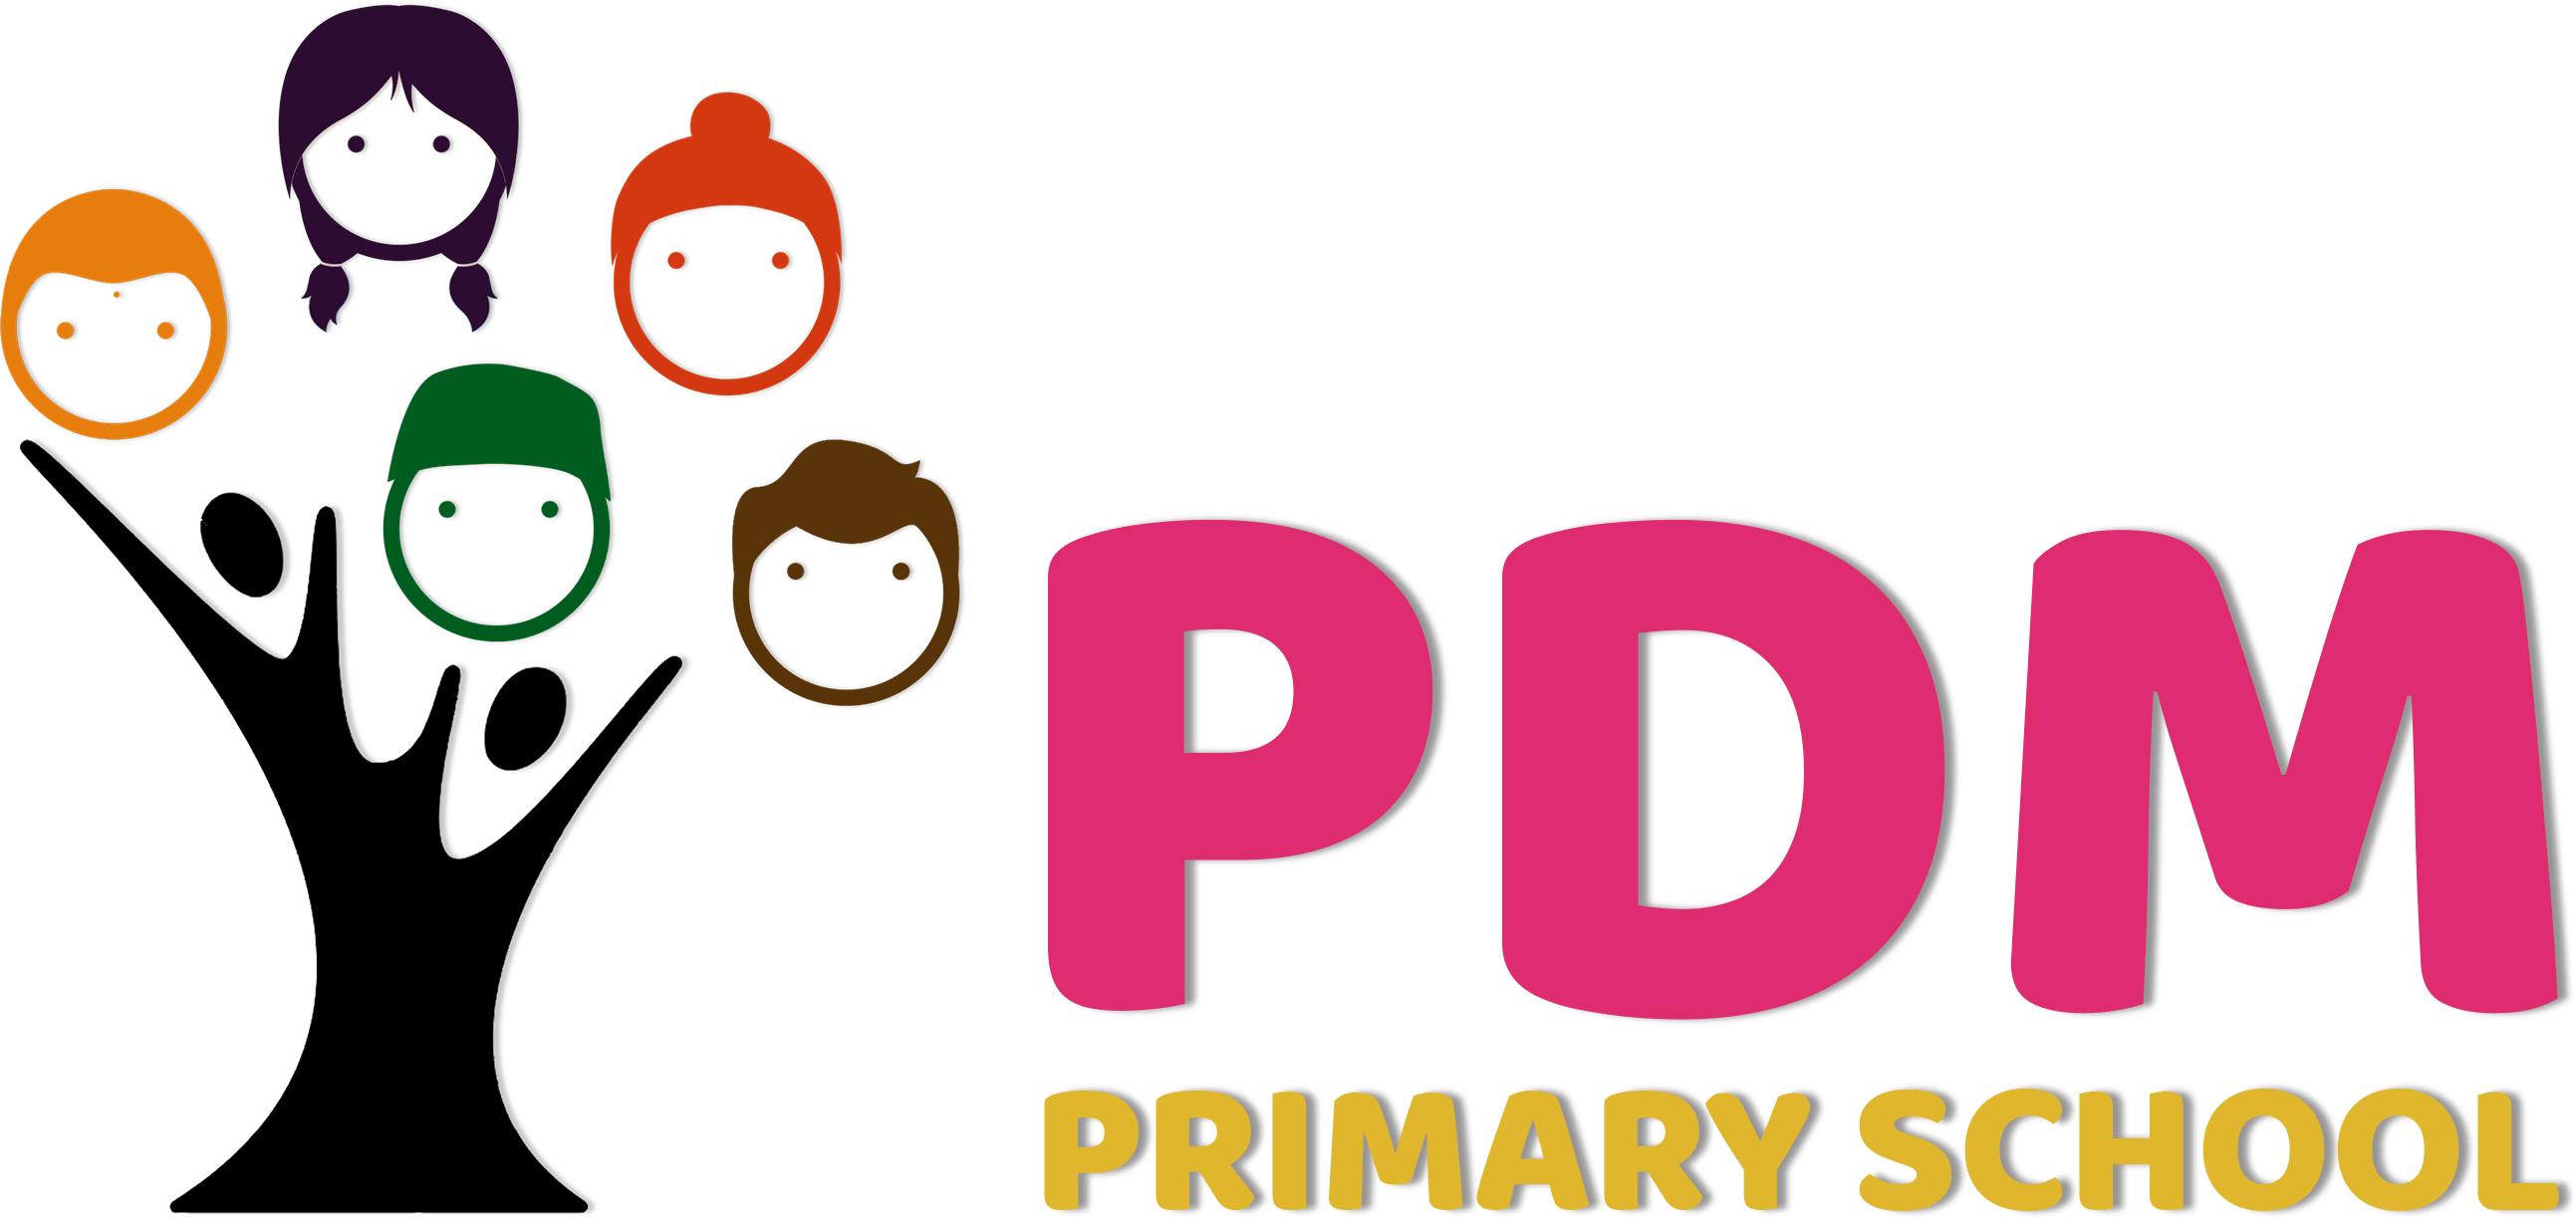 PDM PRIMARY SCHOOL|Schools|Education